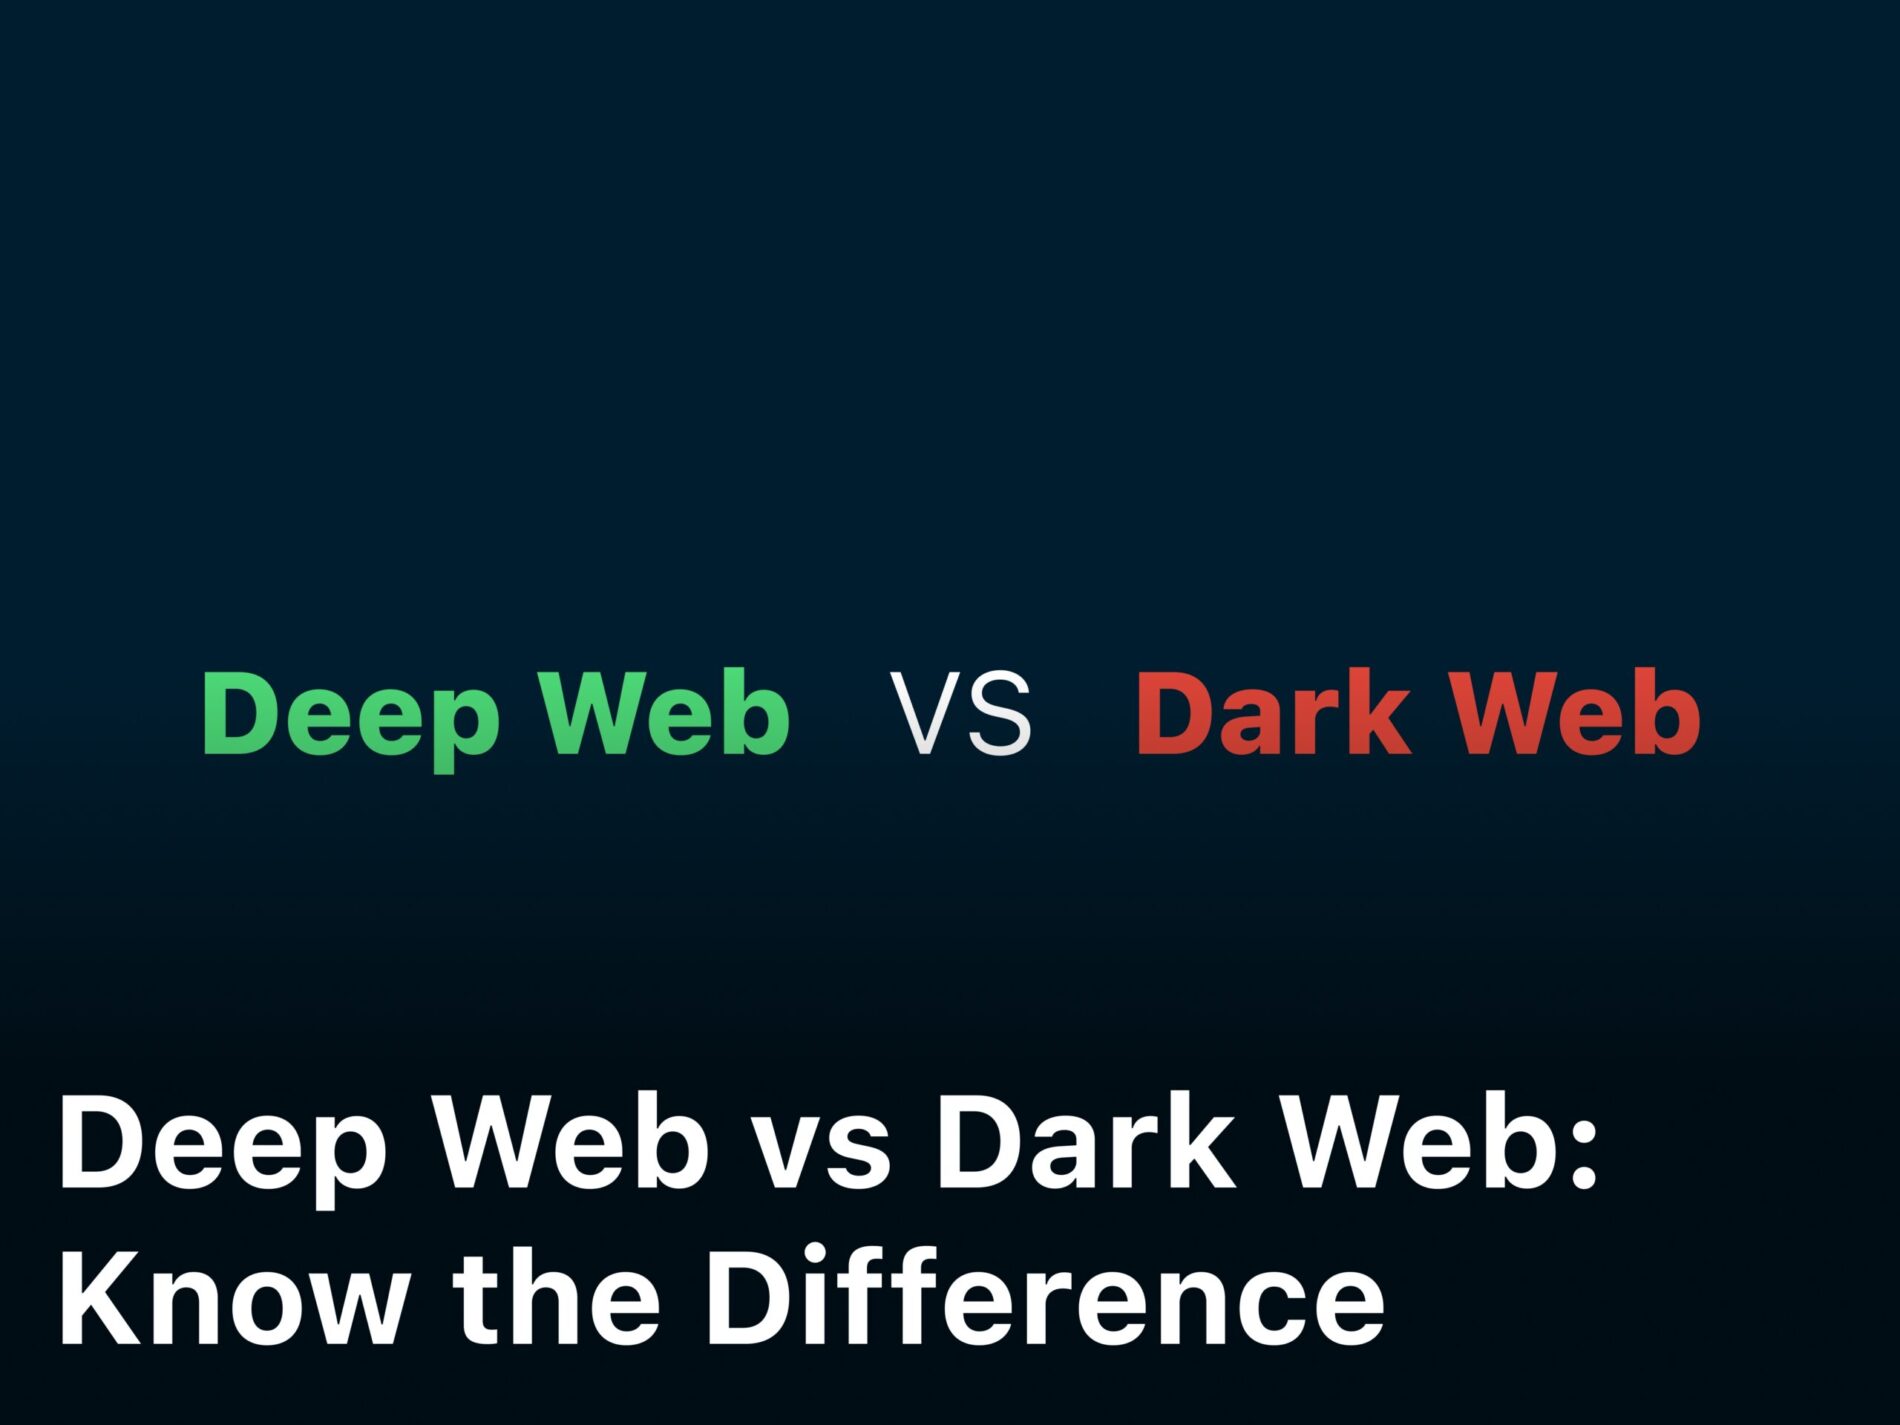 Deep web vs dark web